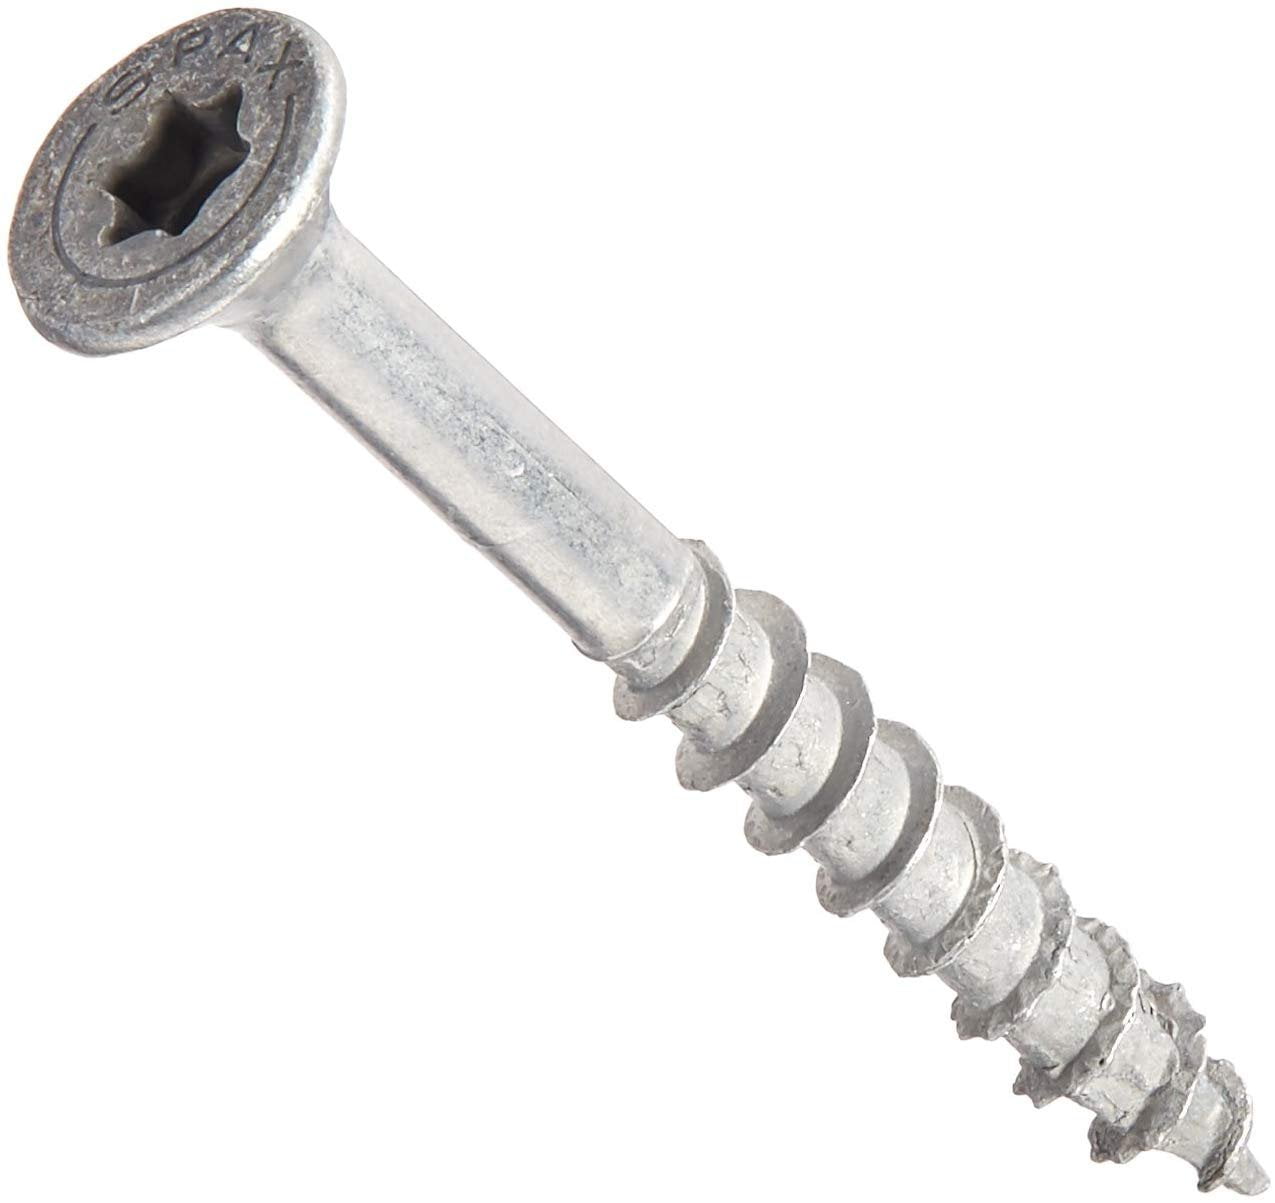 External screws